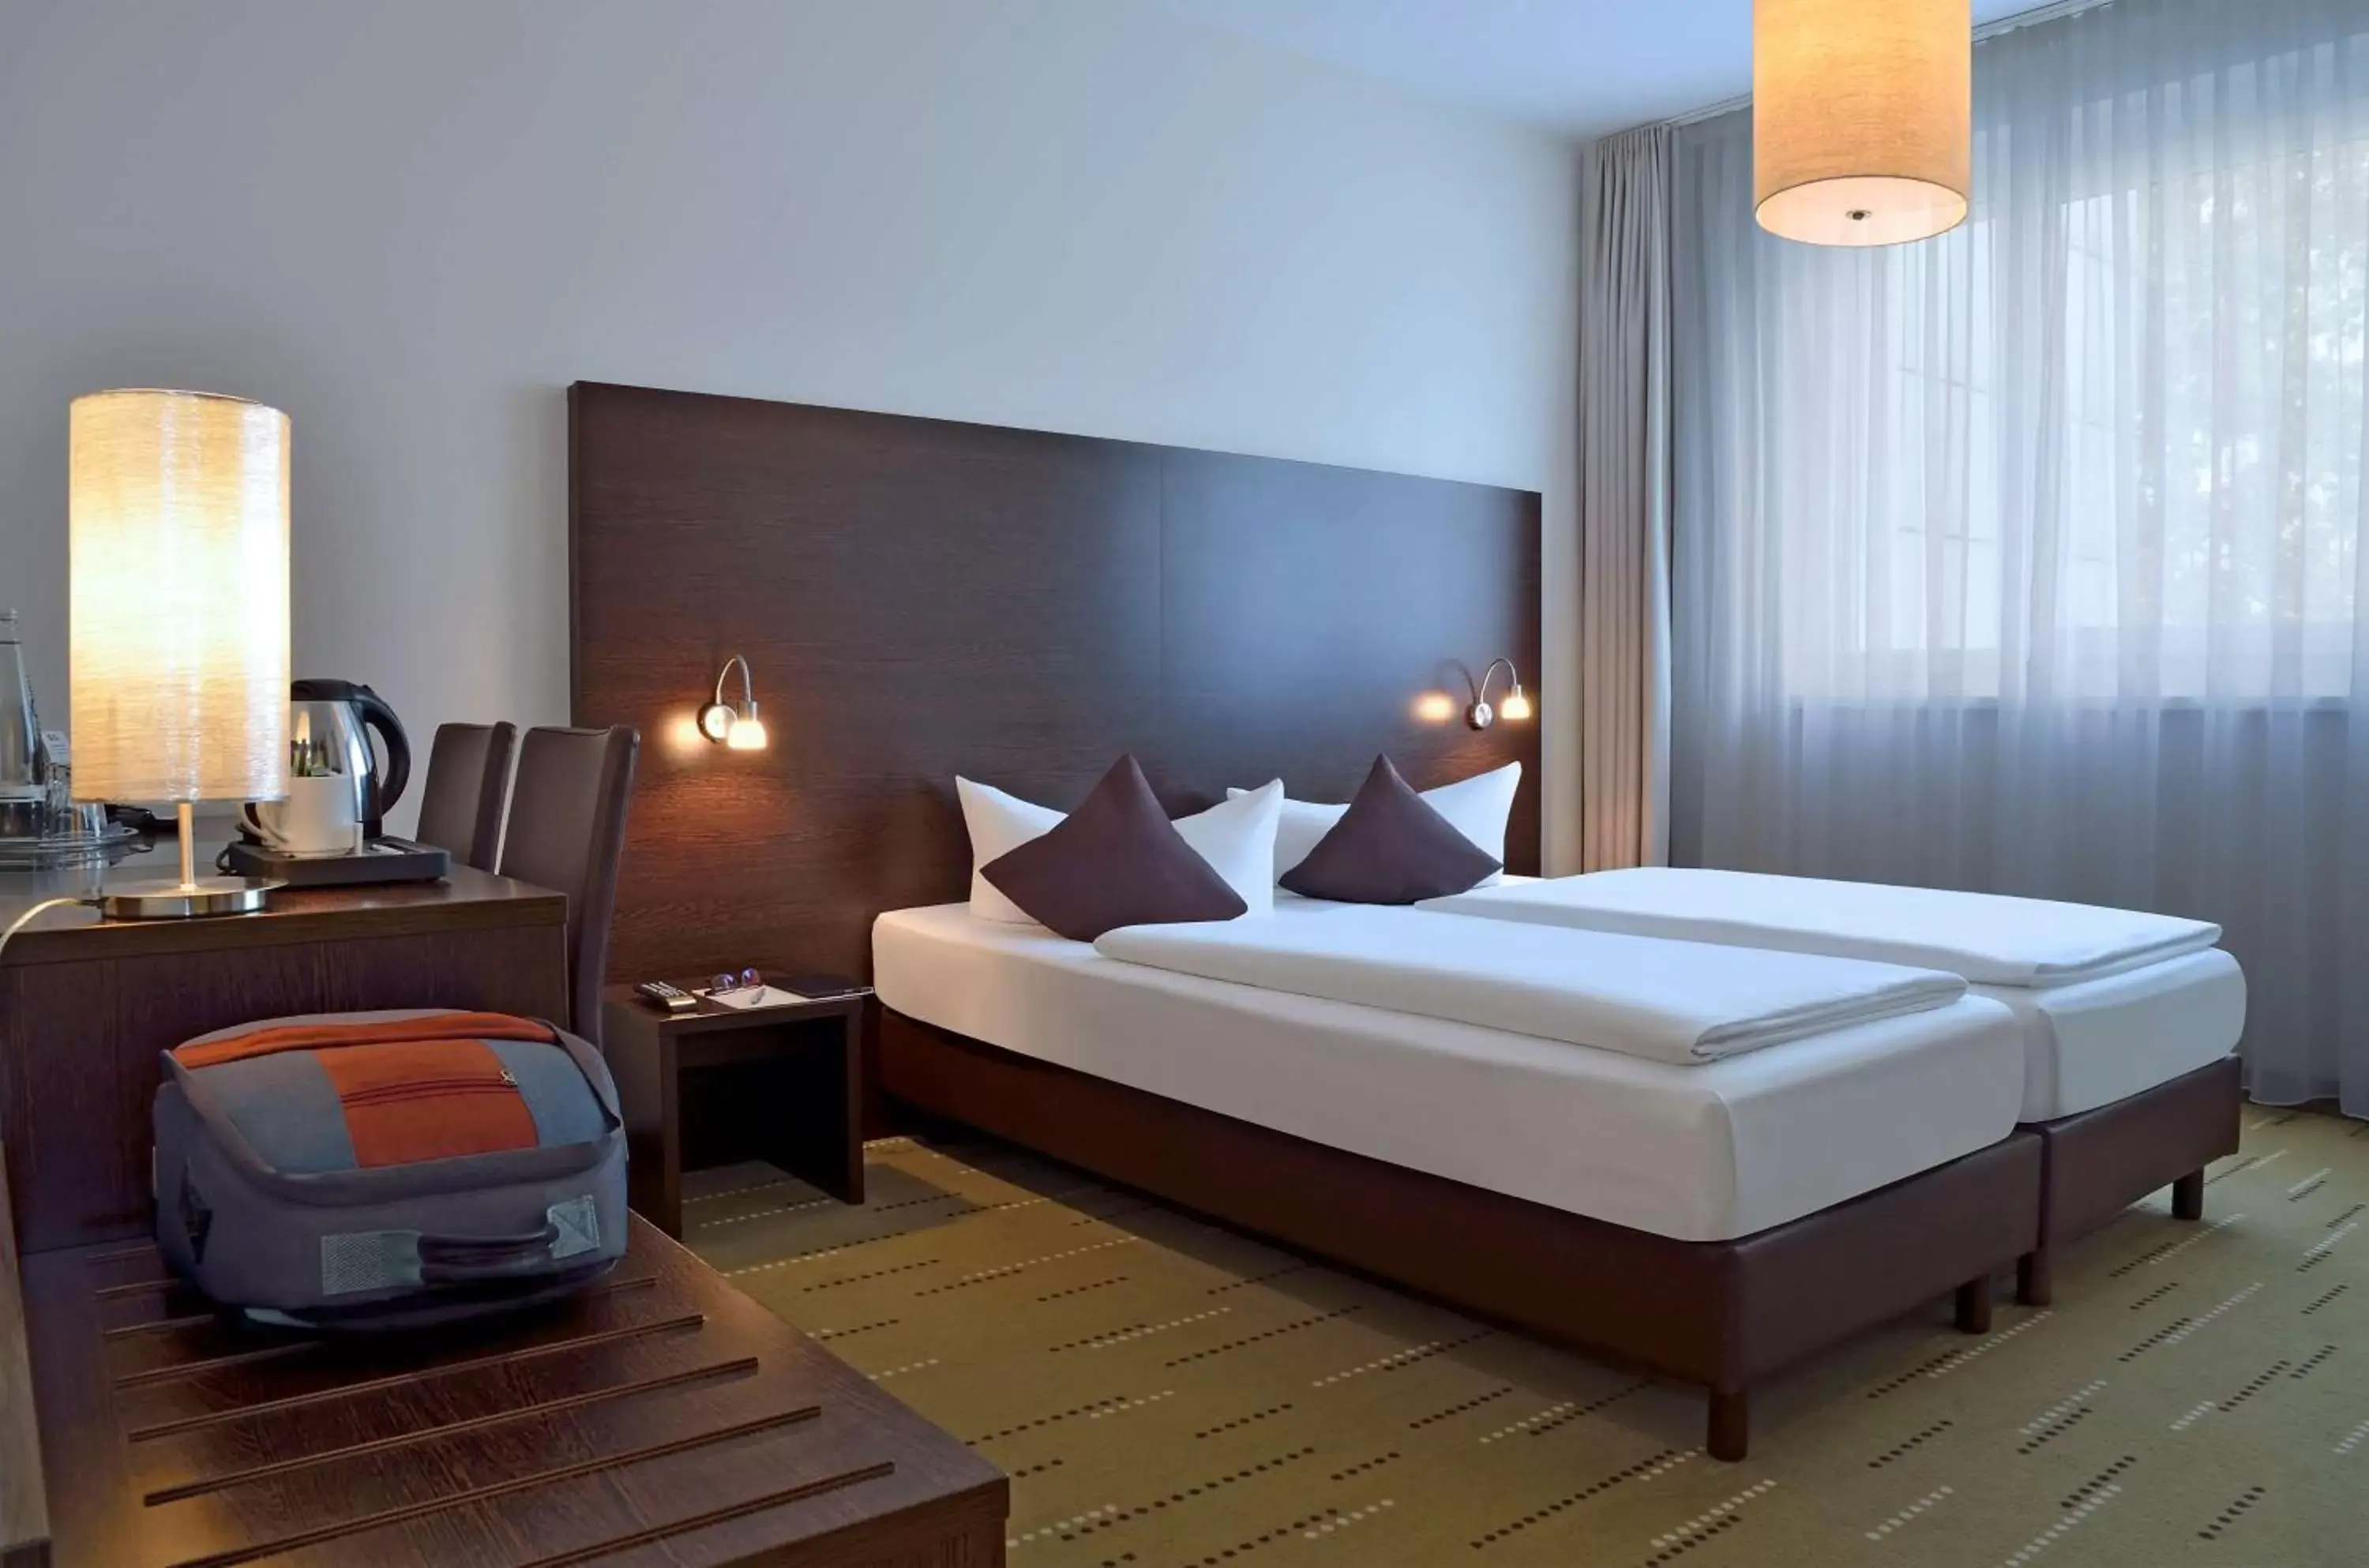 Bedroom, Bed in Best Western Hotel am Spittelmarkt